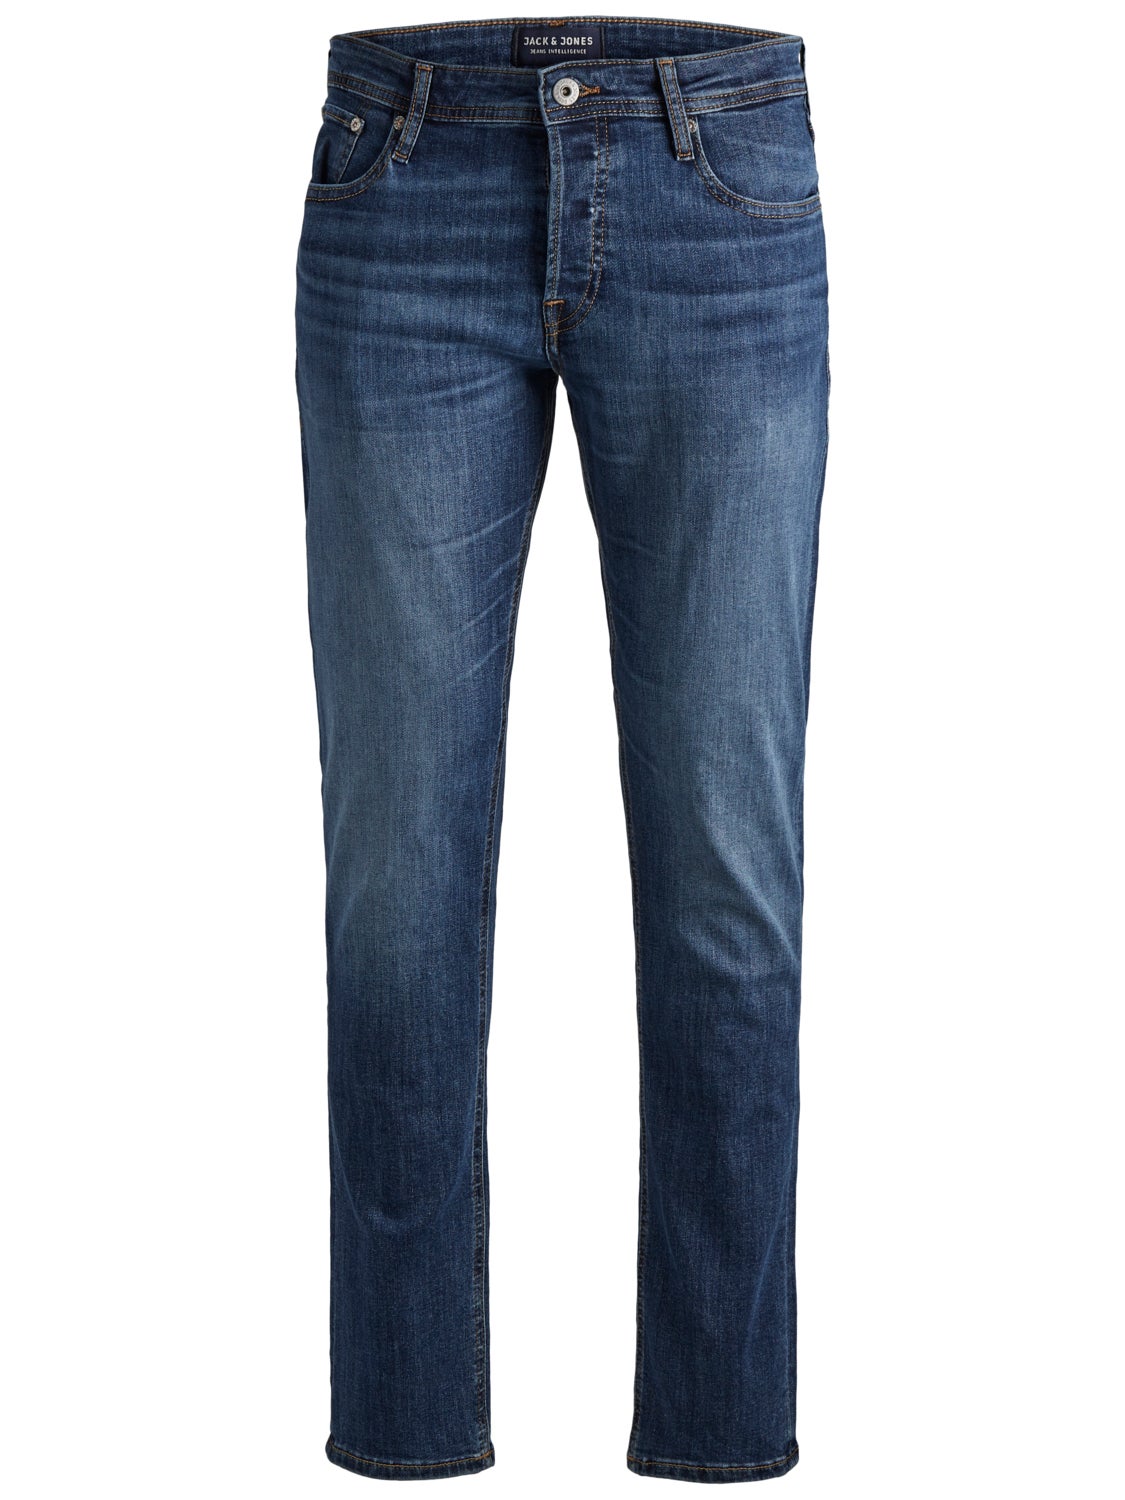 NOOS JJORIGINAL Jack & fit jeans | Tapered Jones® AM 814 Blue | Medium JJIMIKE